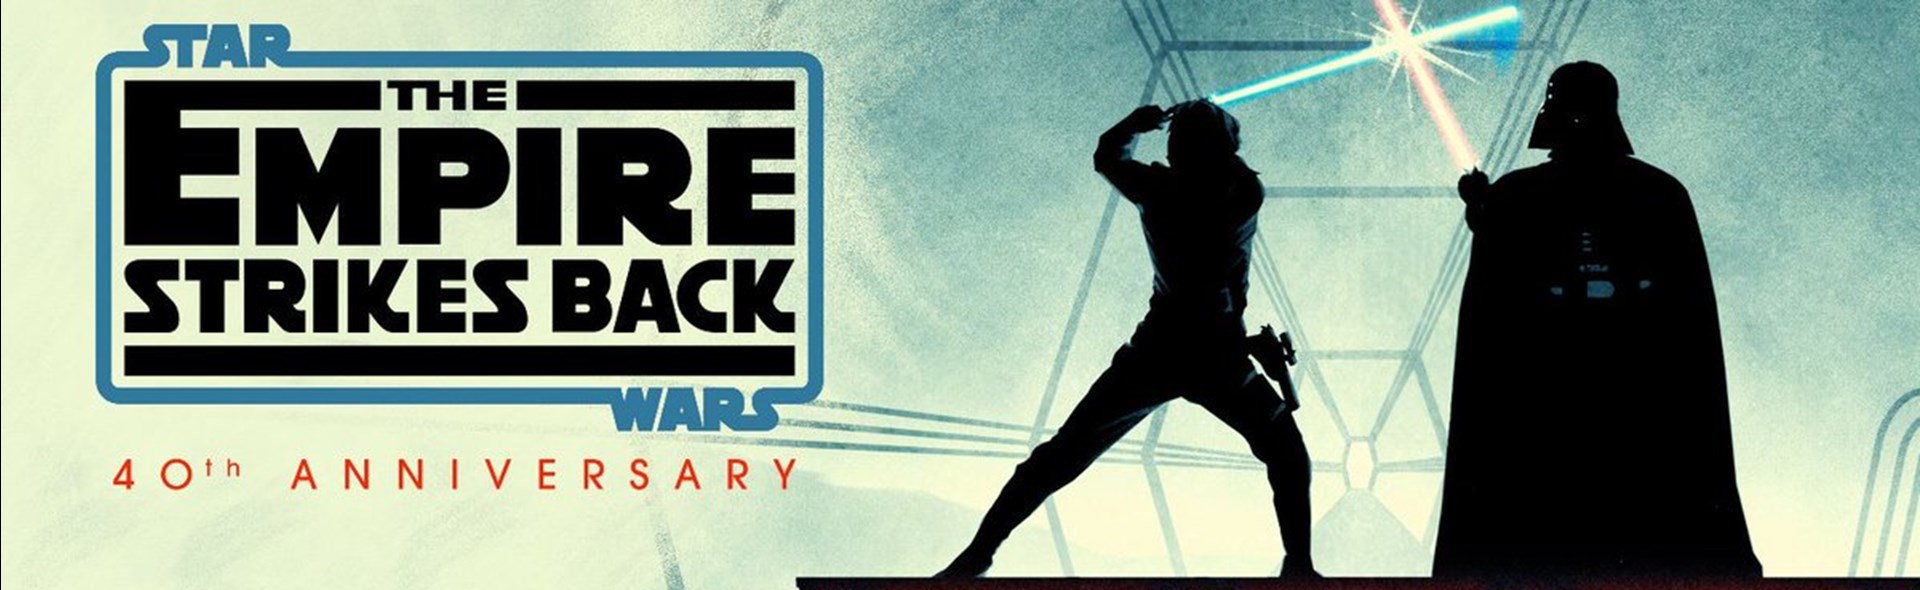 The Empire Strikes Back (PG)